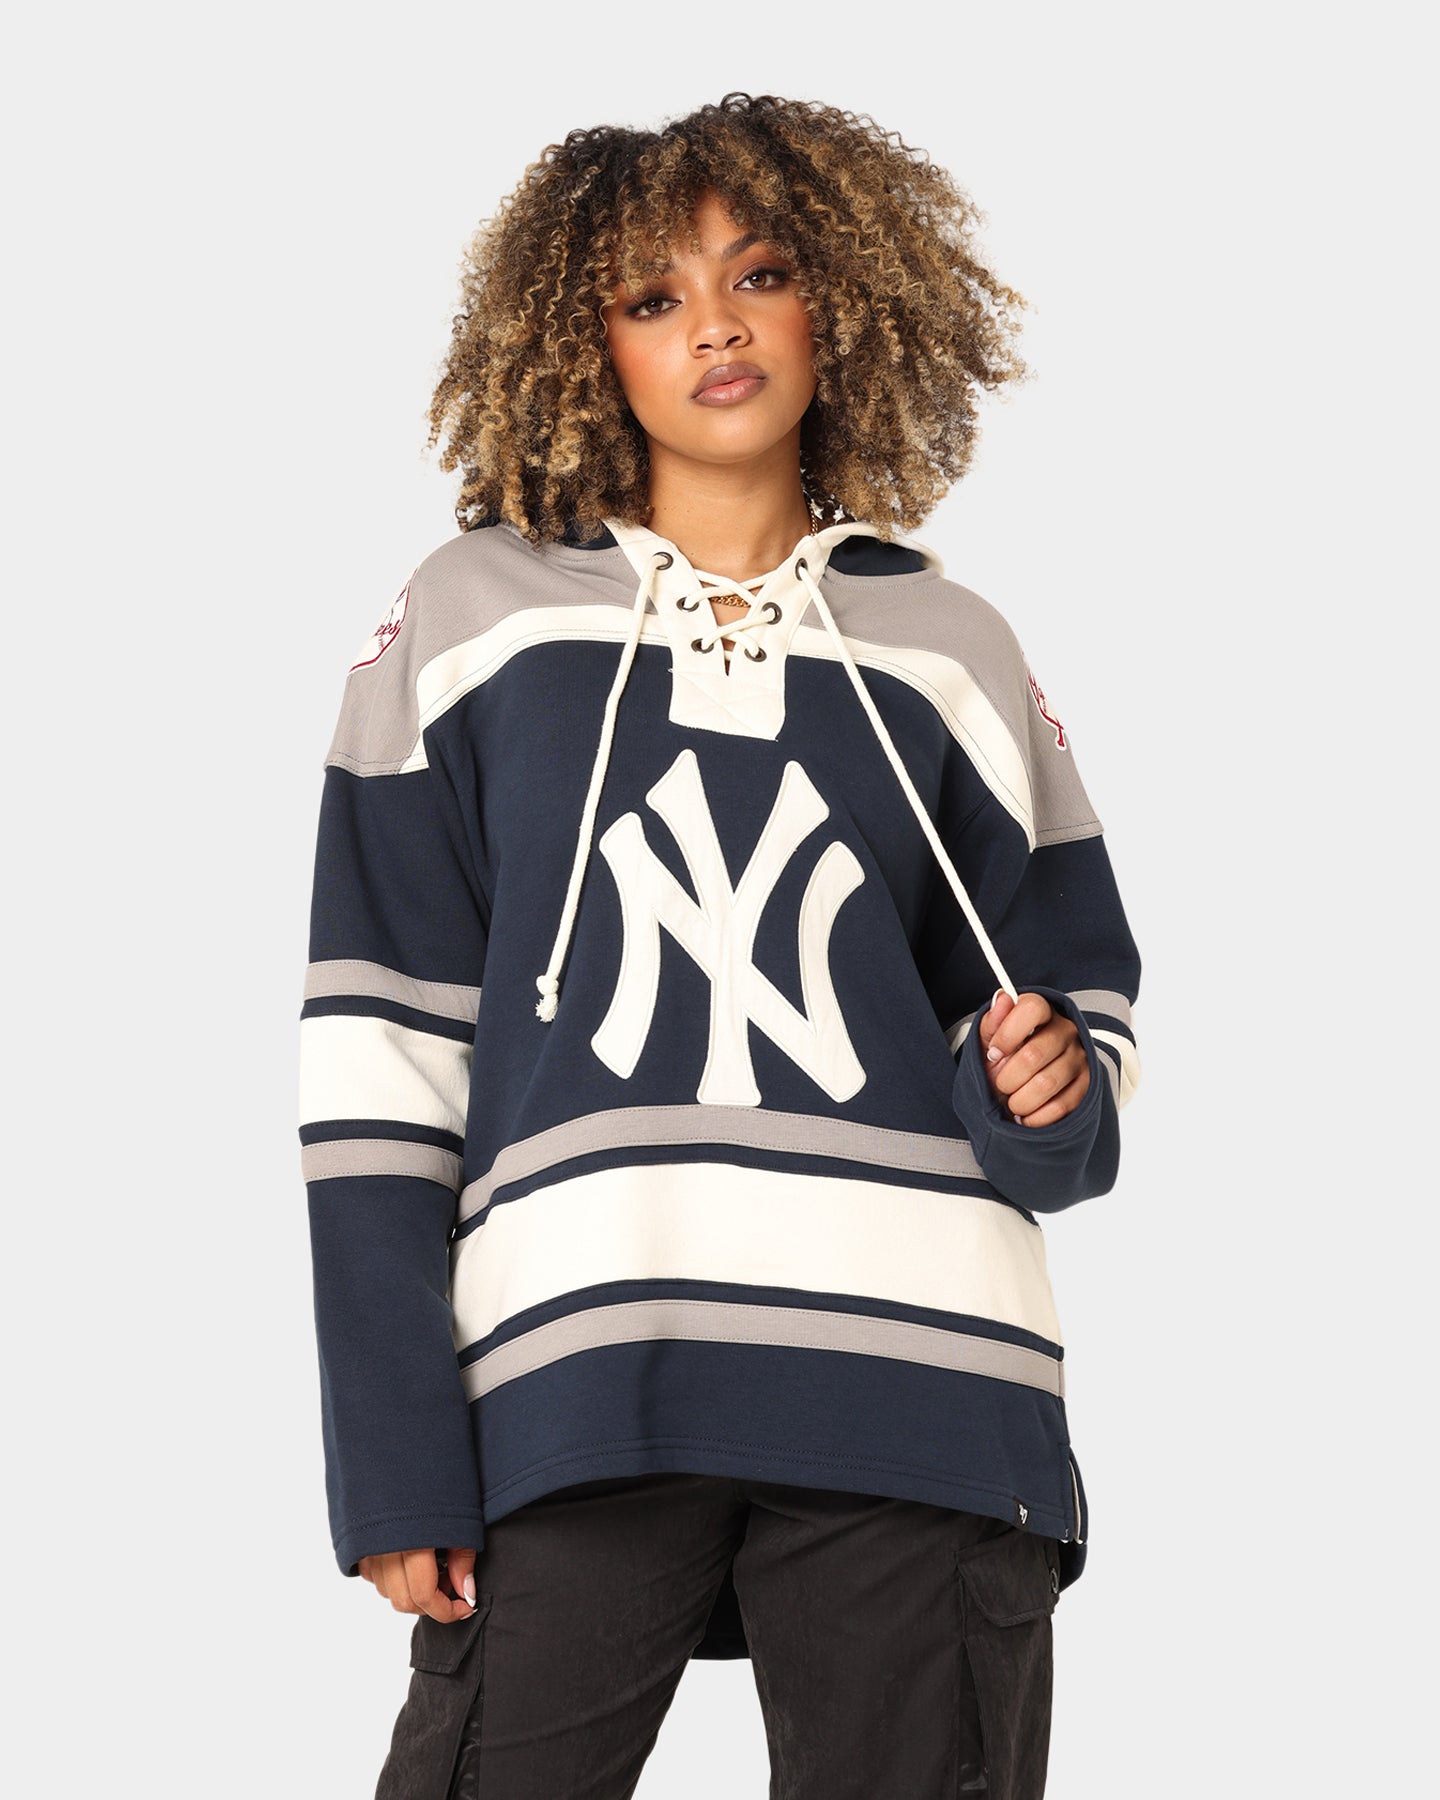 47 Brand New York Yankees Superior Lacer Hoodie Full Navy